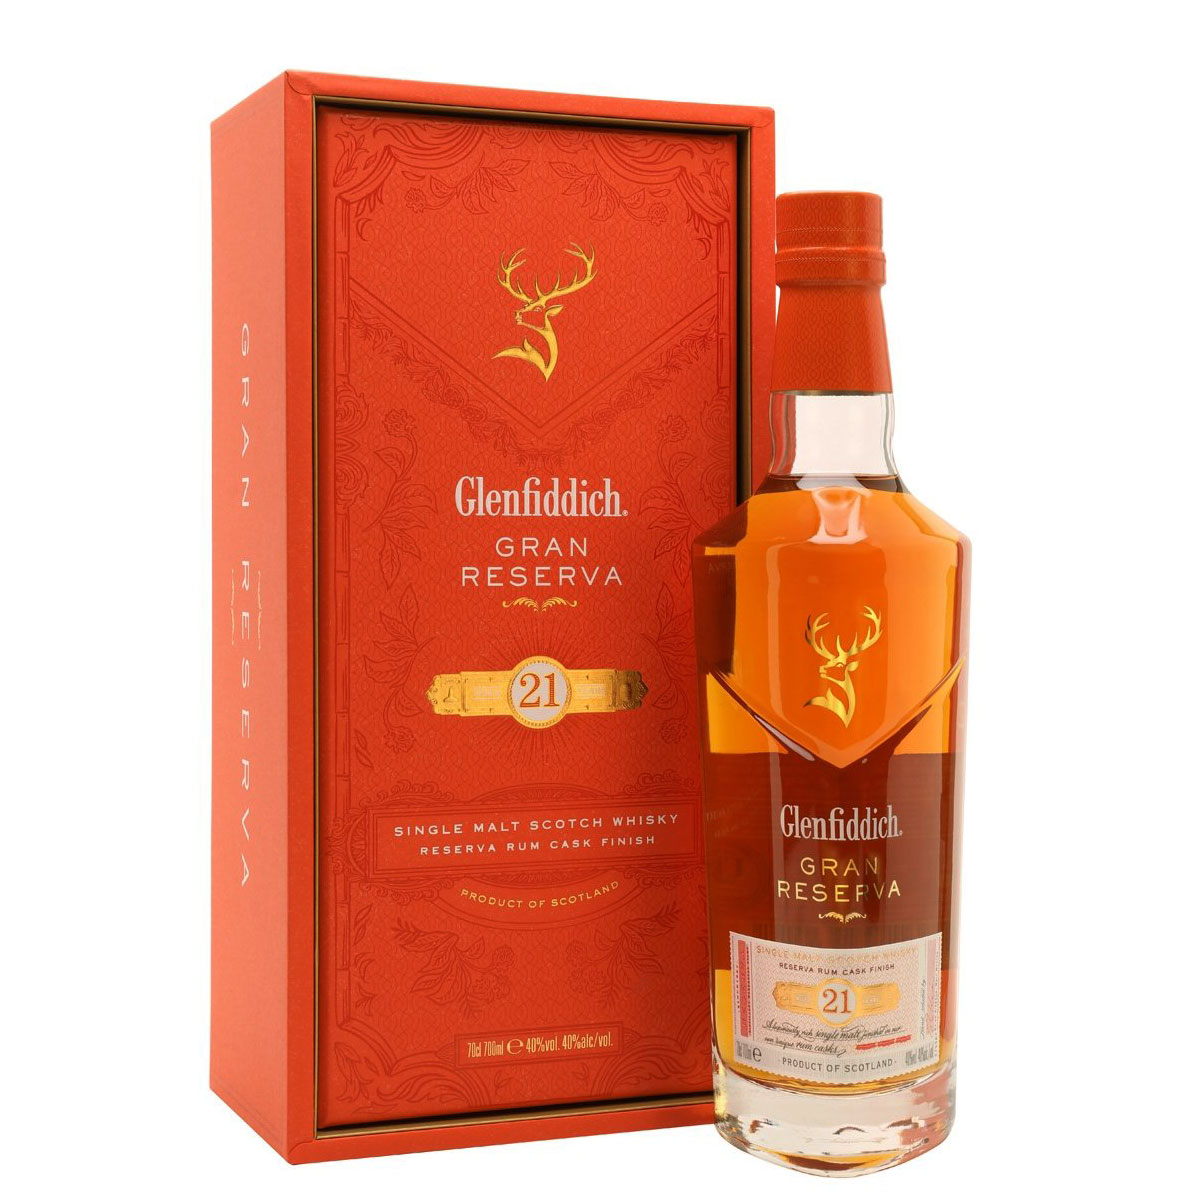 a bottle of Glenfiddich 21 year old Rum Cask Finisk Whisky